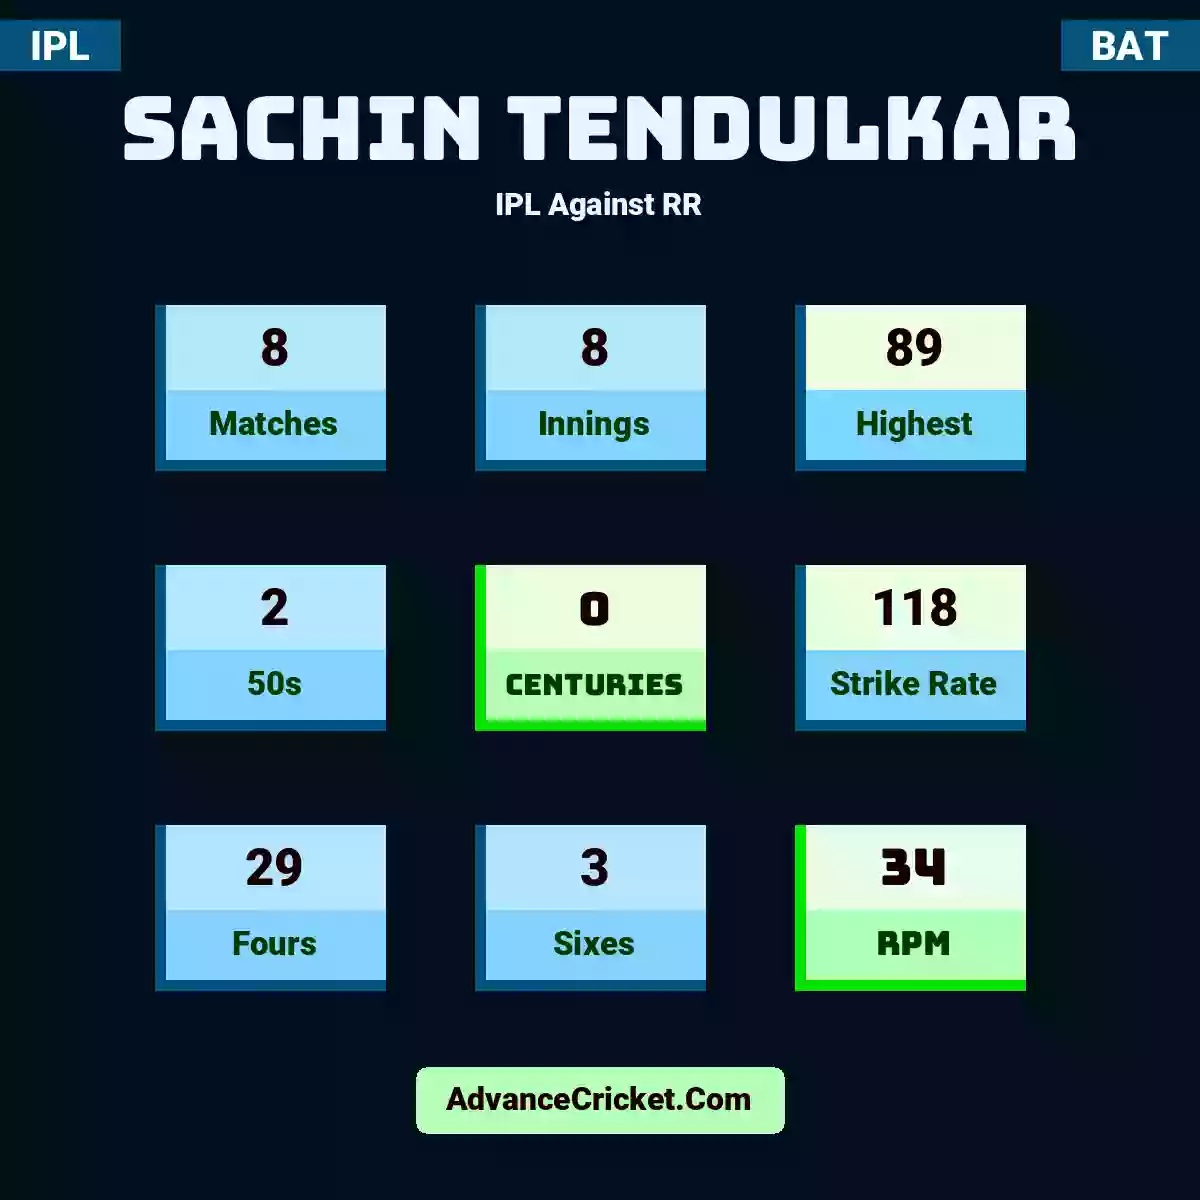 Sachin Tendulkar IPL  Against RR, Sachin Tendulkar played 8 matches, scored 89 runs as highest, 2 half-centuries, and 0 centuries, with a strike rate of 118. S.Tendulkar hit 29 fours and 3 sixes, with an RPM of 34.